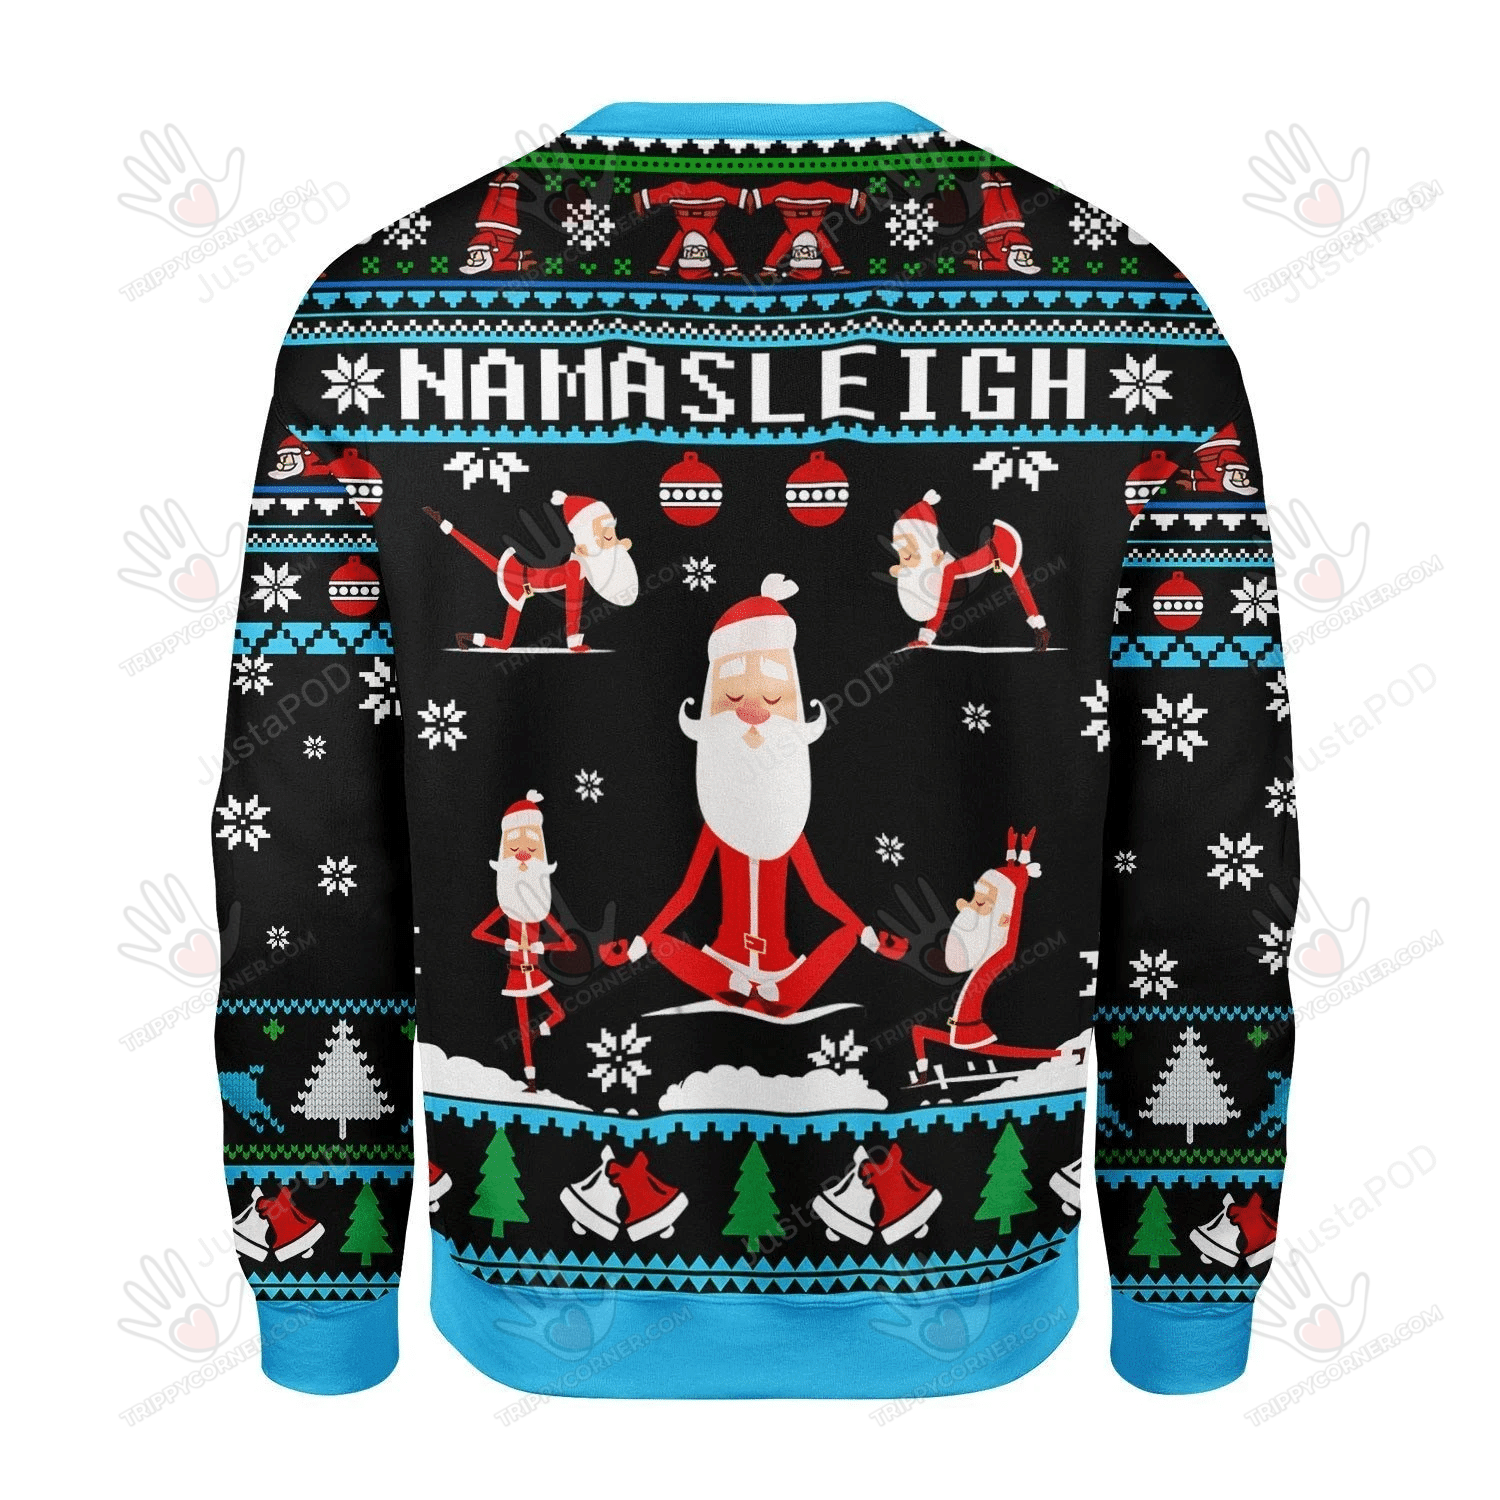 Merry Christmas Gearhomies Namasleigh Santa Ugly Christmas Sweater, All Over Ugly Sweater Christmas Gift   516